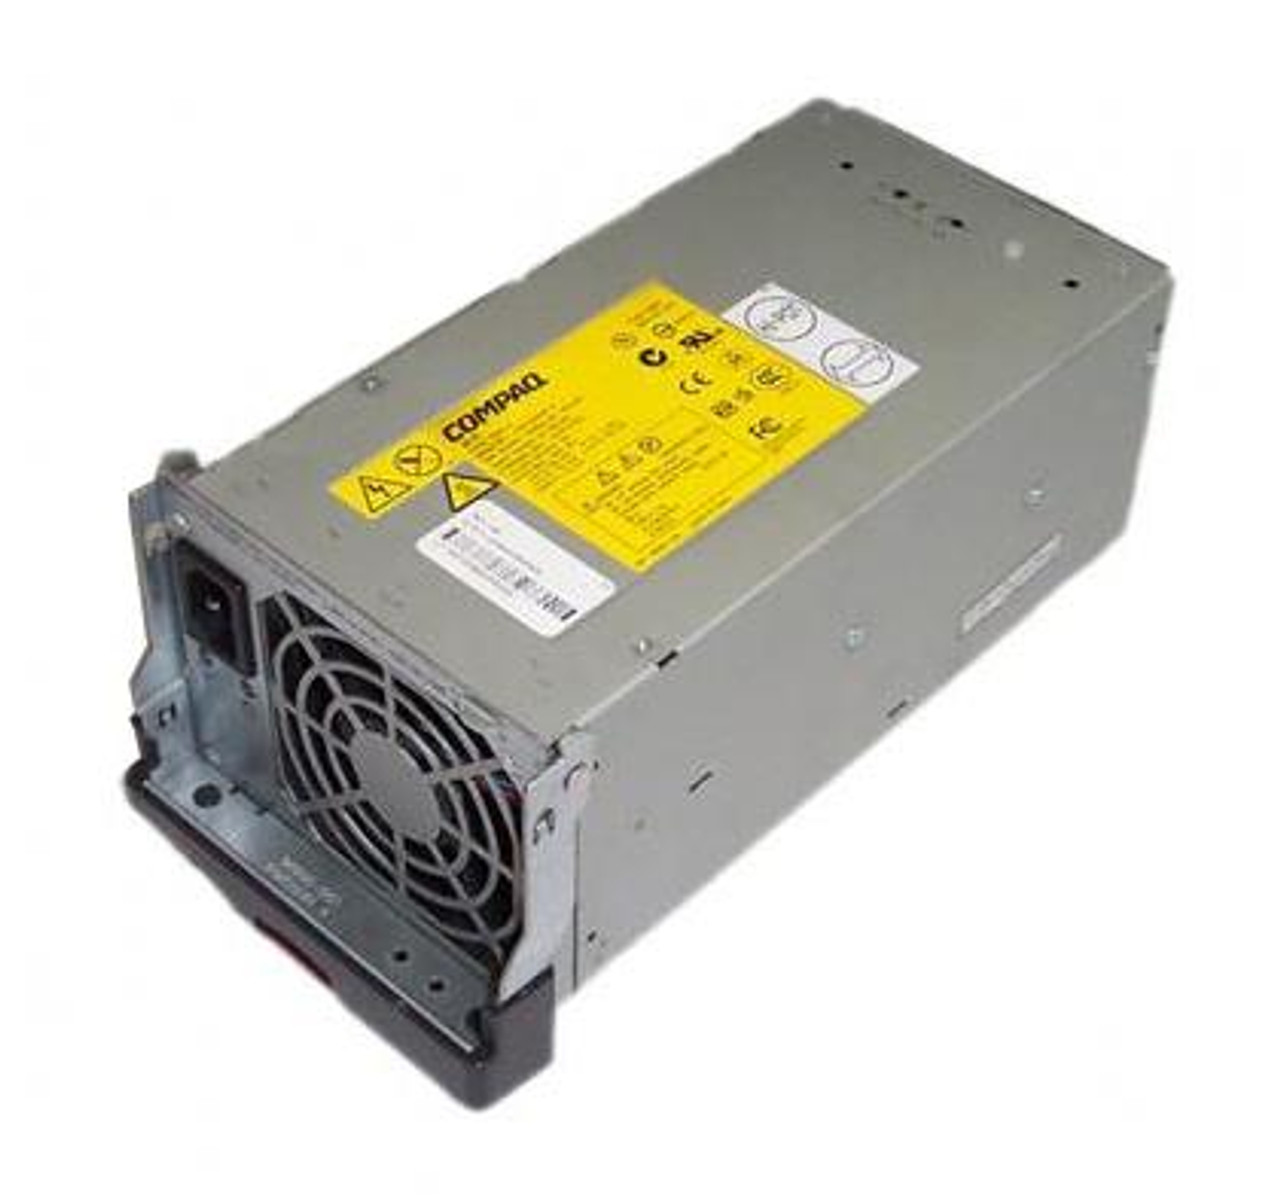 236845-001-FSW Compaq 600-Watts Redundant Hot Swap Power Supply for ProLiant ML530 and ML570 G2 Server